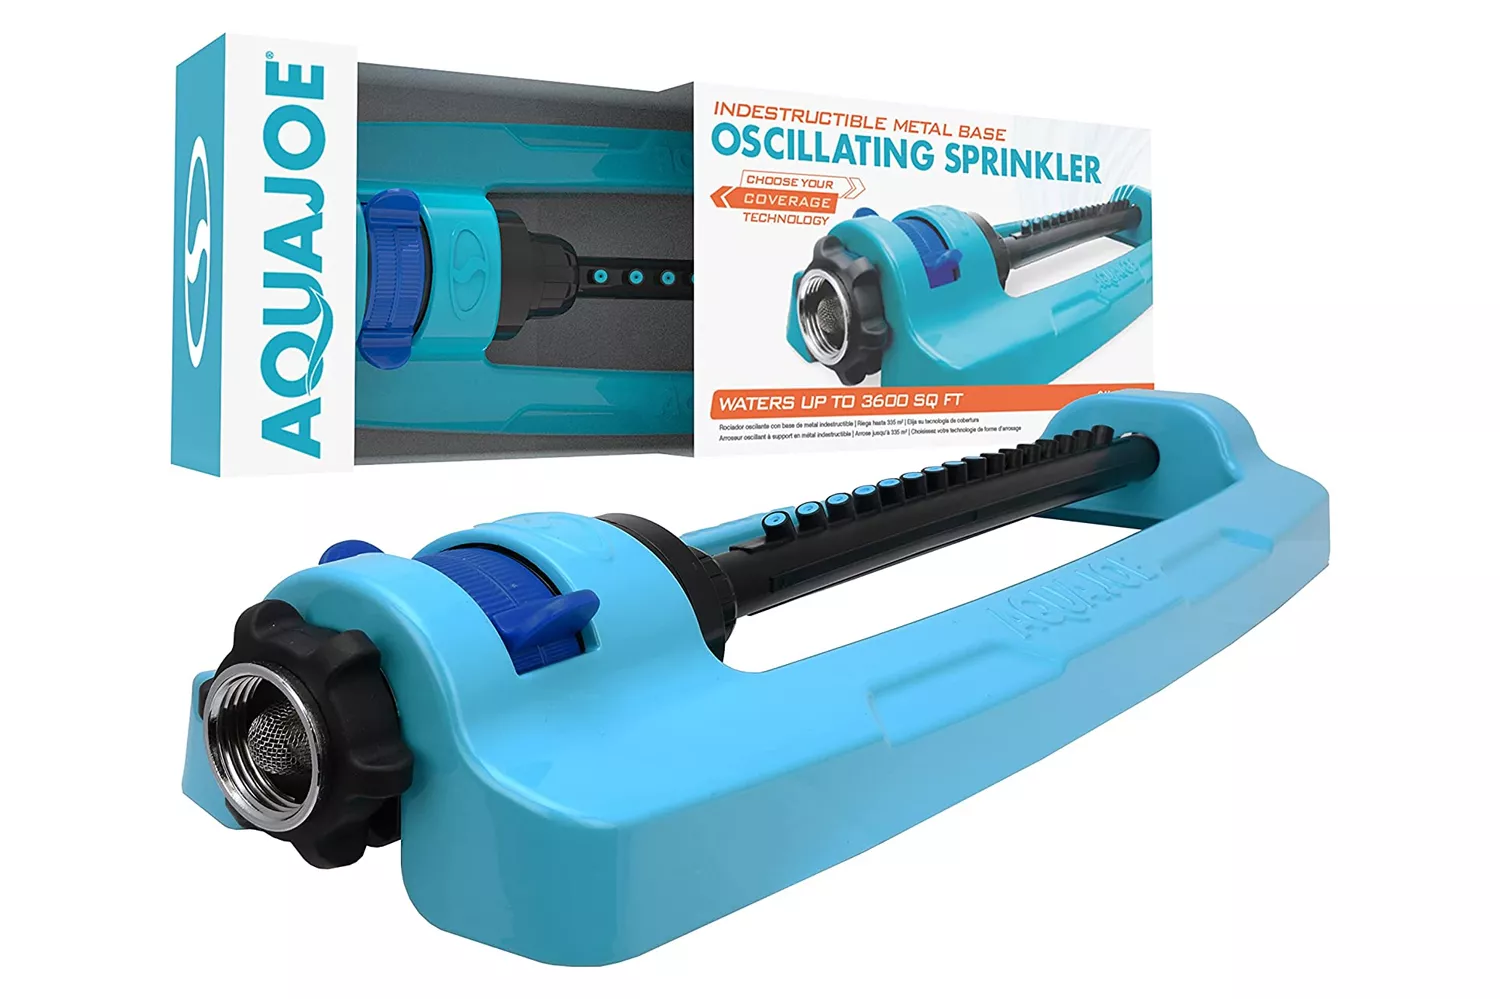 Aqua Joe Indestructible Metal Base Oscillating Sprinkler